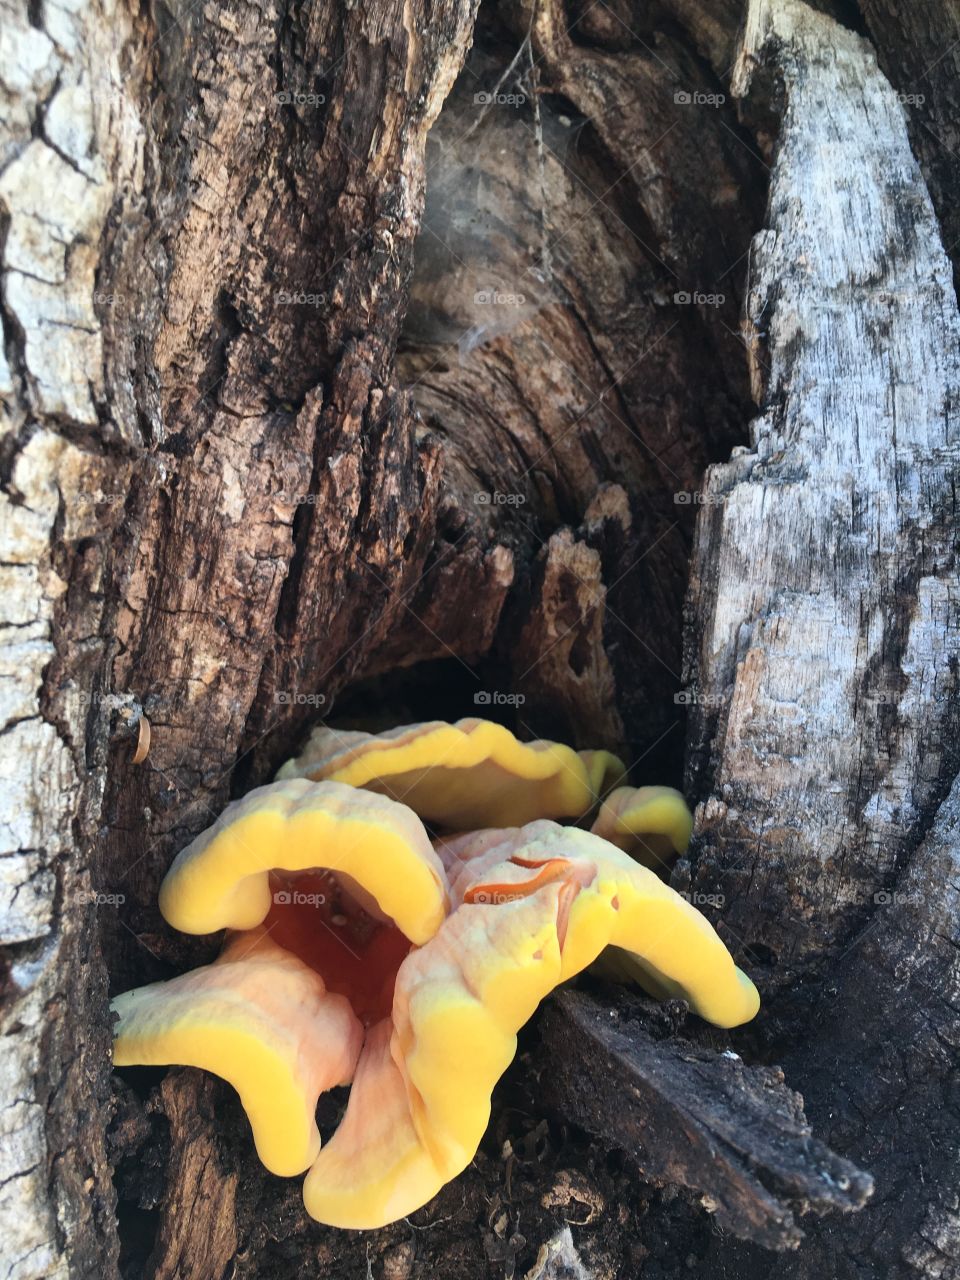 Tree fungus 